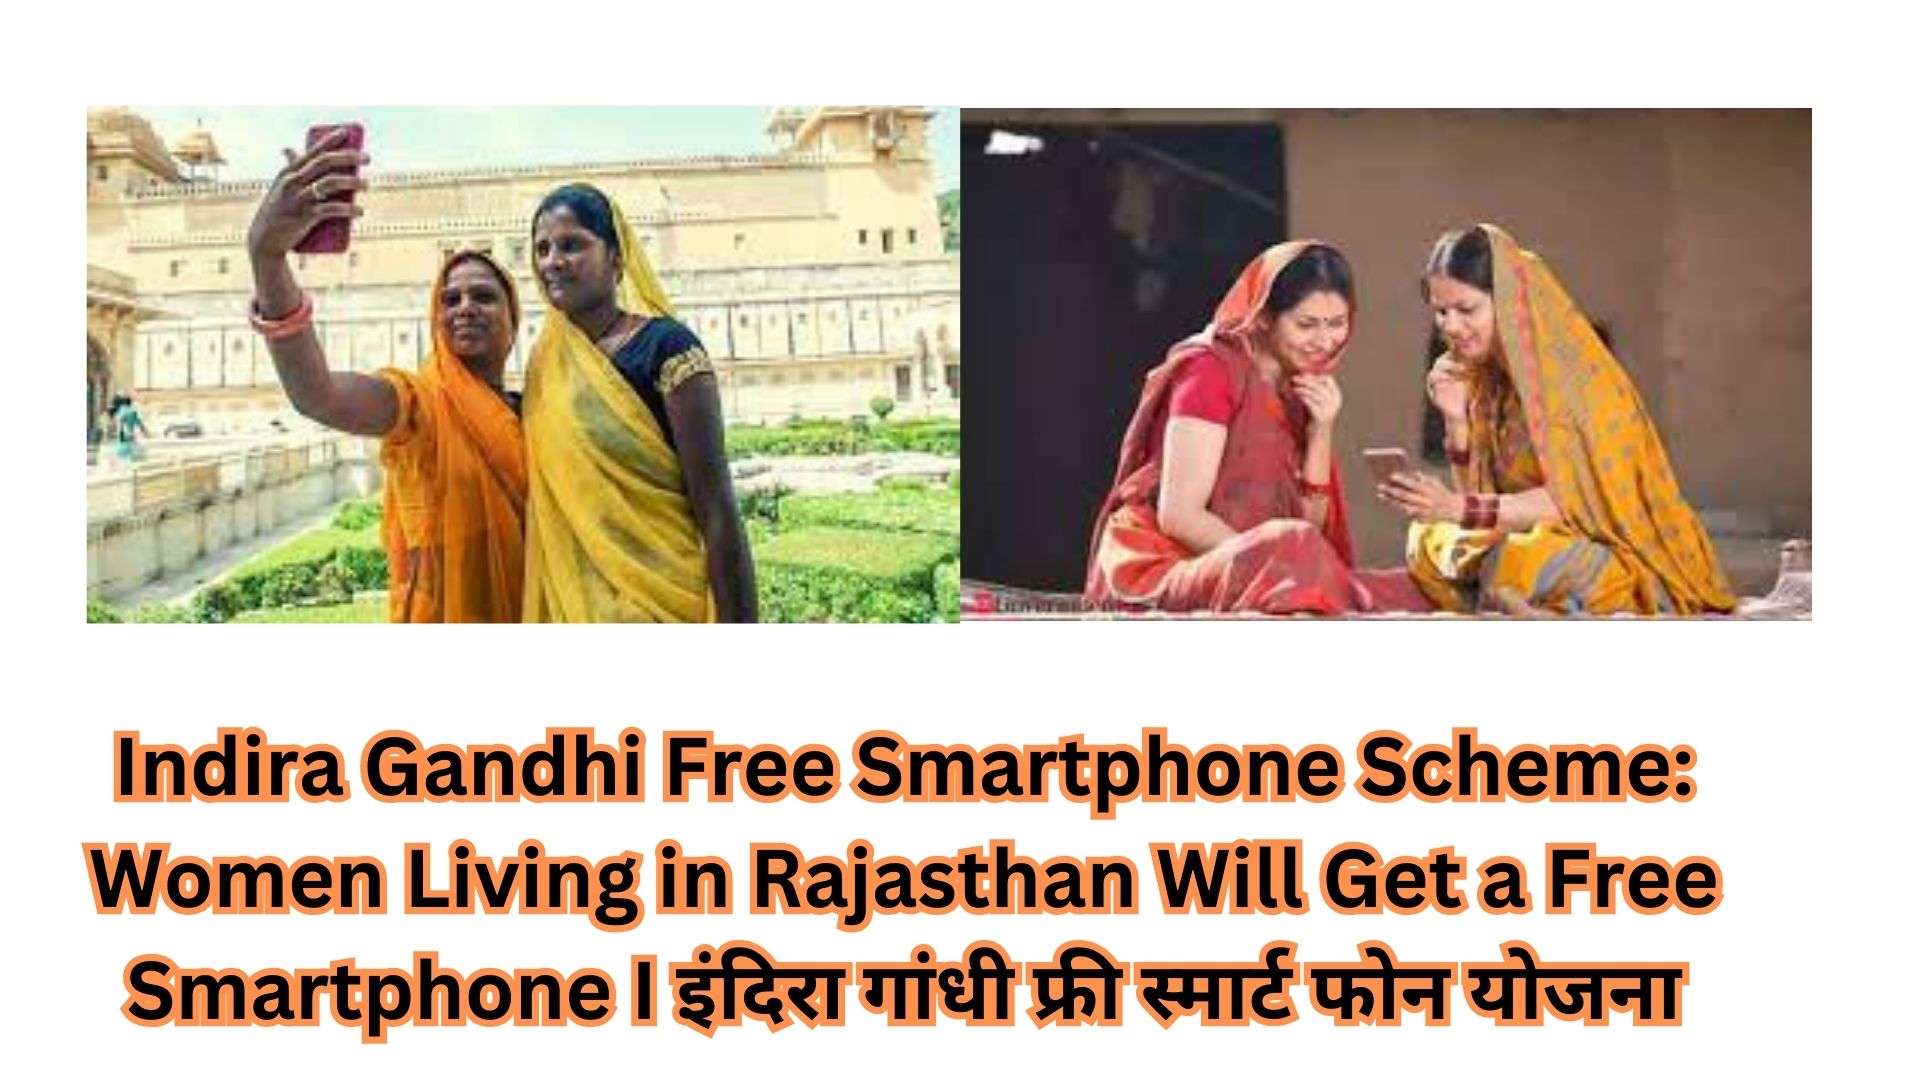 Indira Gandhi Free Smartphone Scheme: Women Living in Rajasthan Will Get a Free Smartphone I इंदिरा गांधी फ्री स्मार्ट फोन योजना